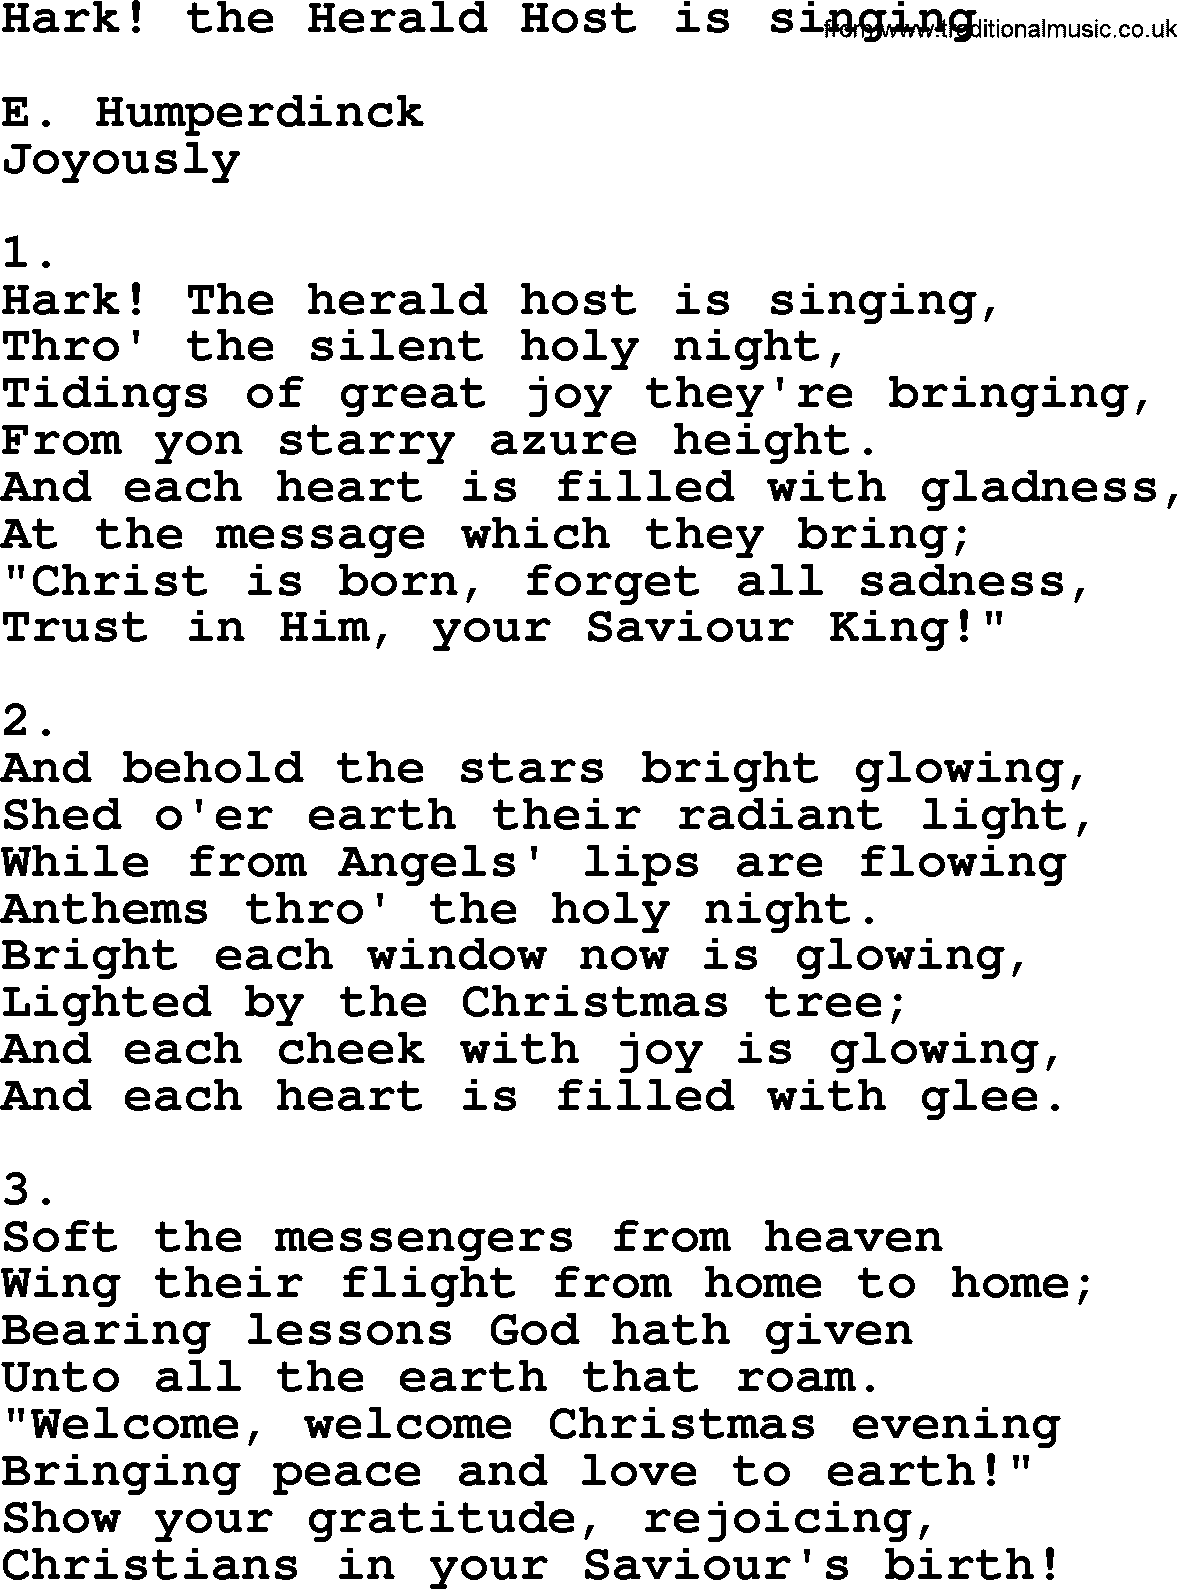 Catholic Hymn: Hark! The Herald Host Is Singing lyrics with PDF